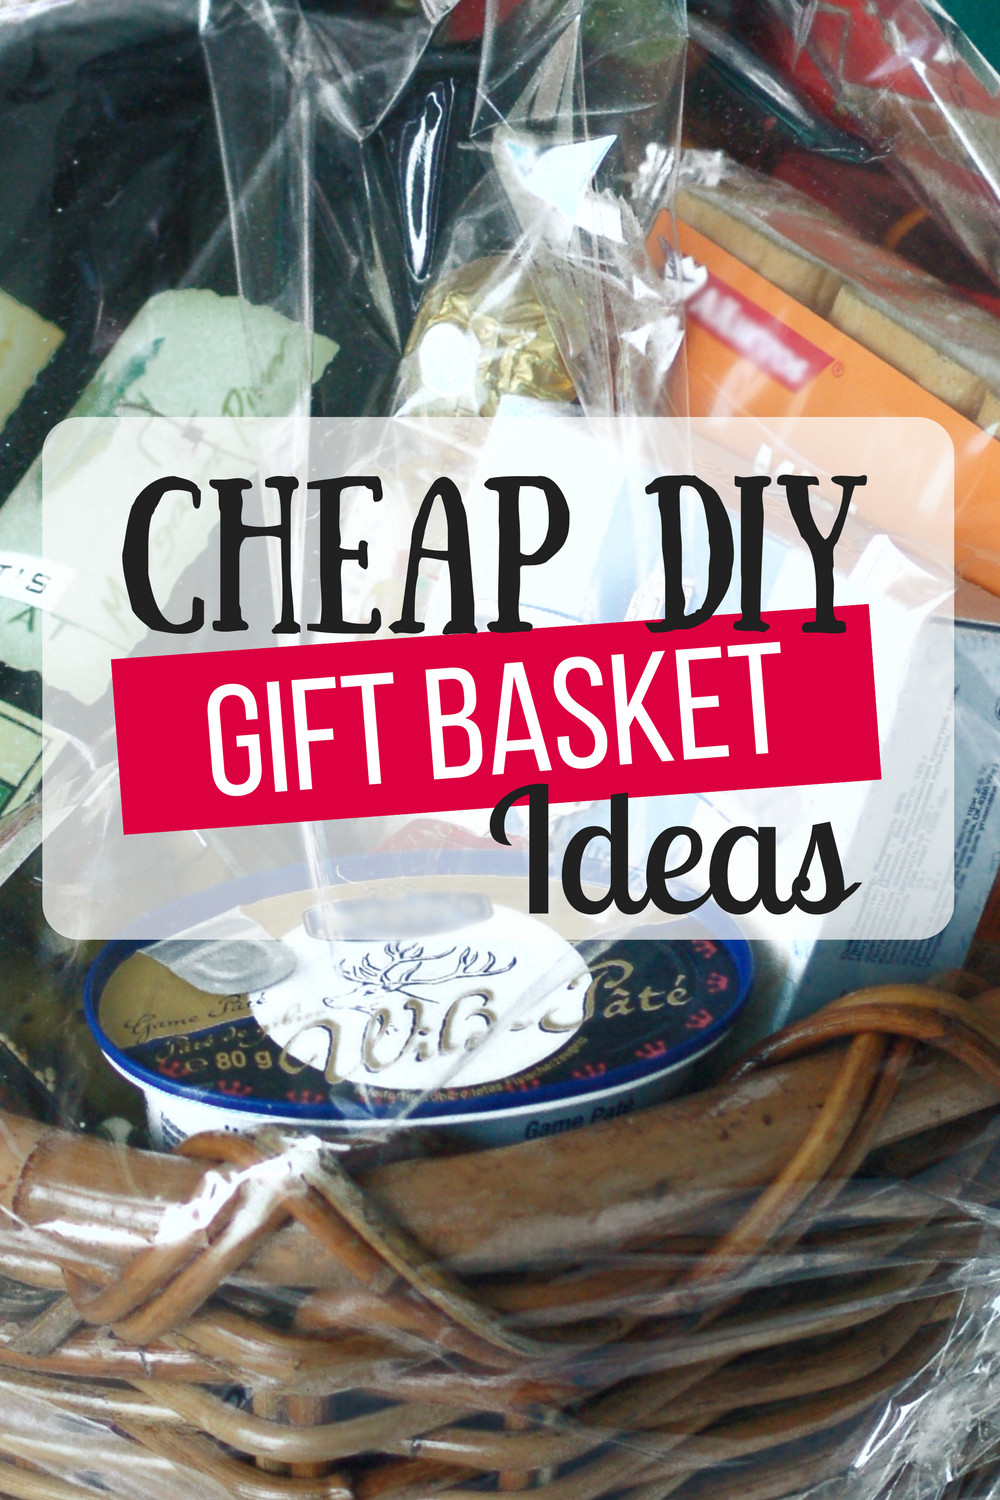 DIY Christmas Gift Baskets
 Cheap DIY Gift Baskets The Busy Bud er